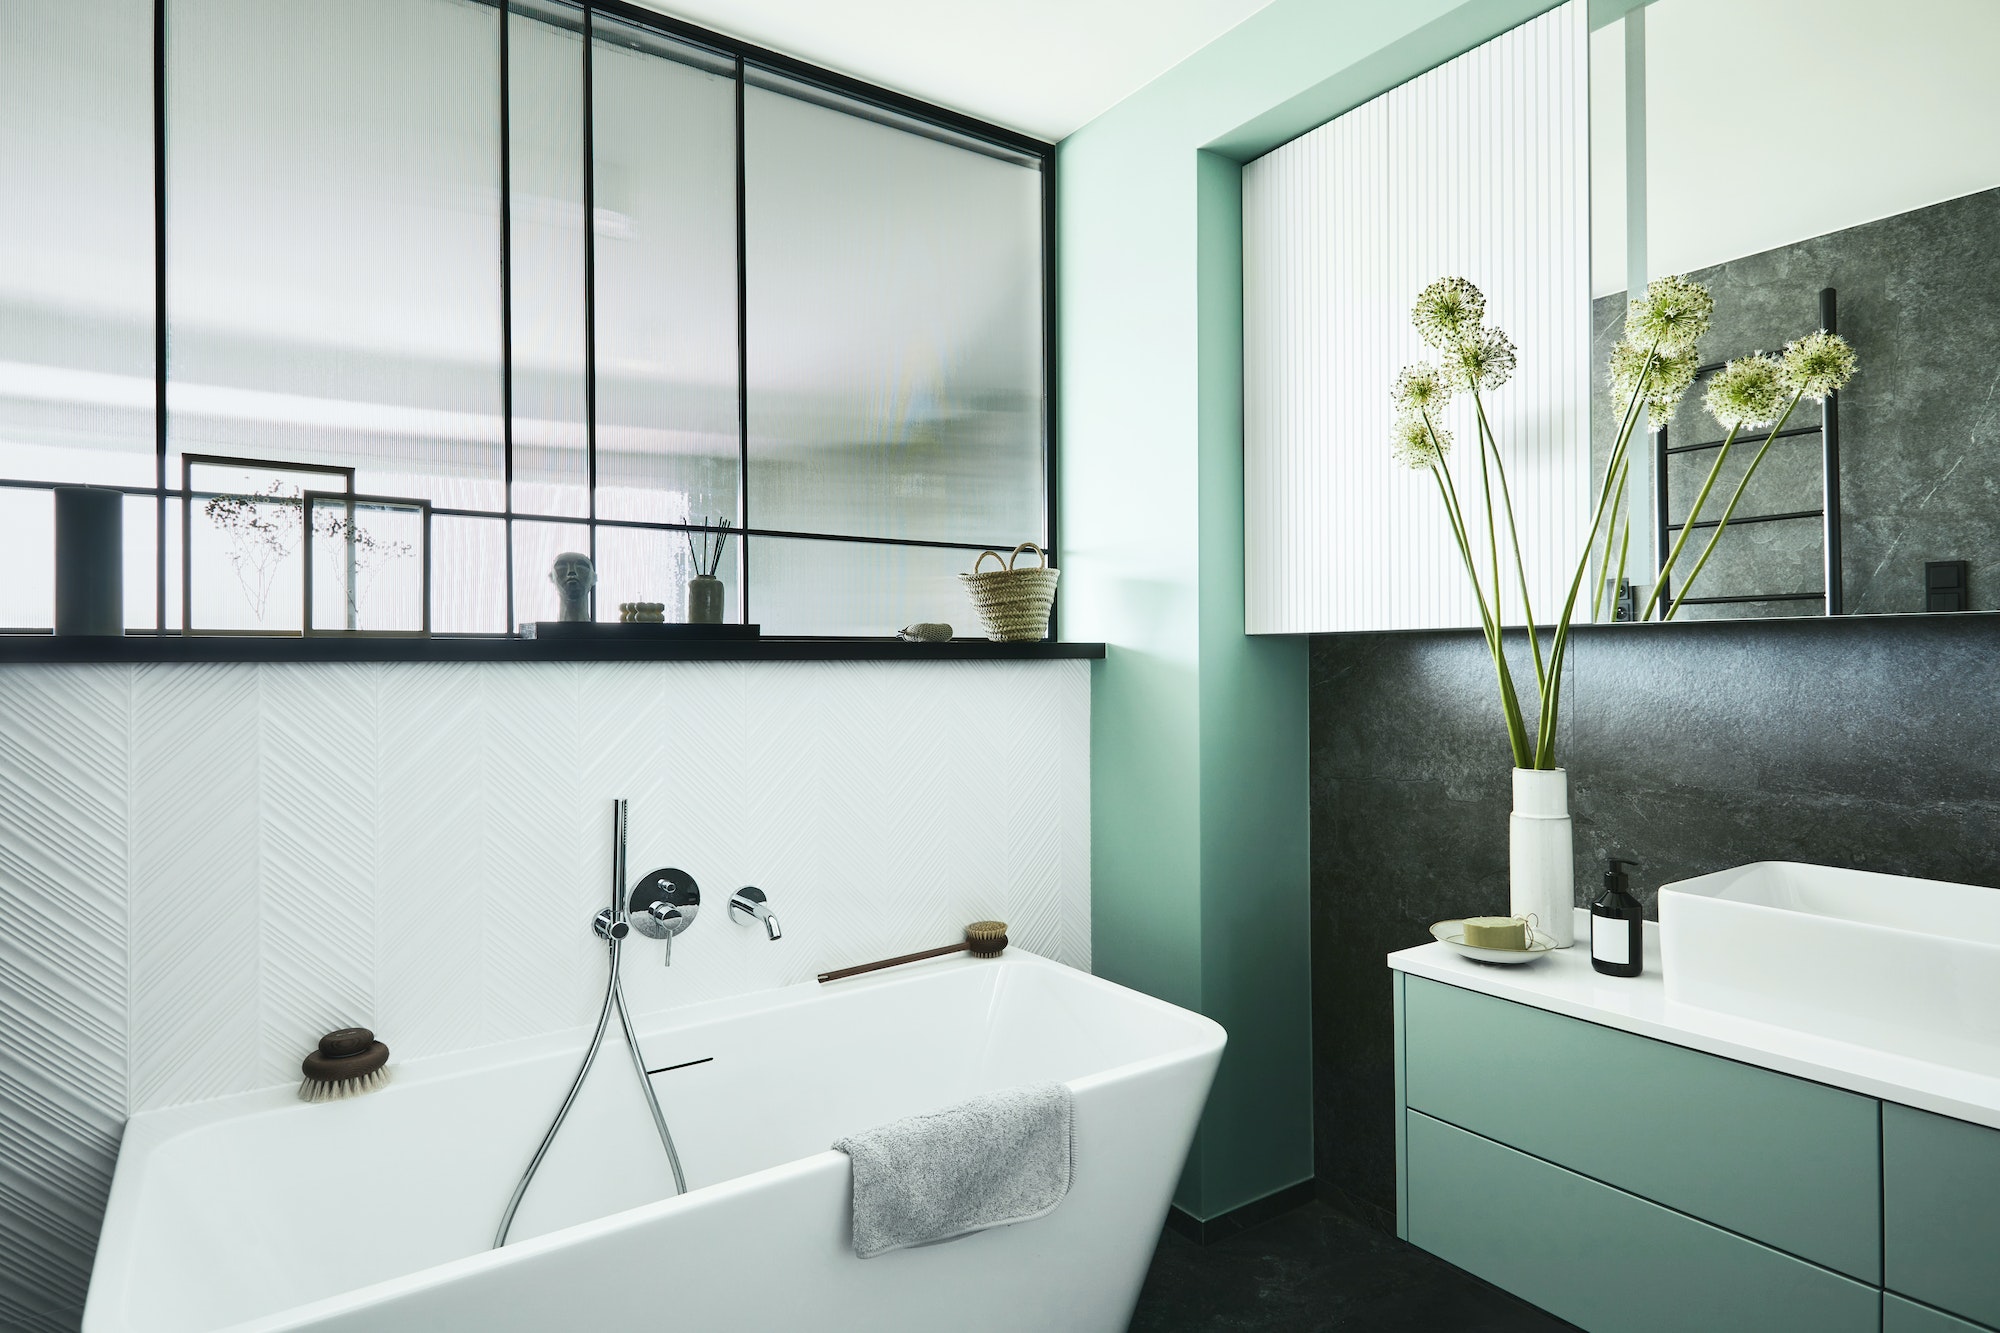 Stylish and creative minimalistic small bathroom interior design